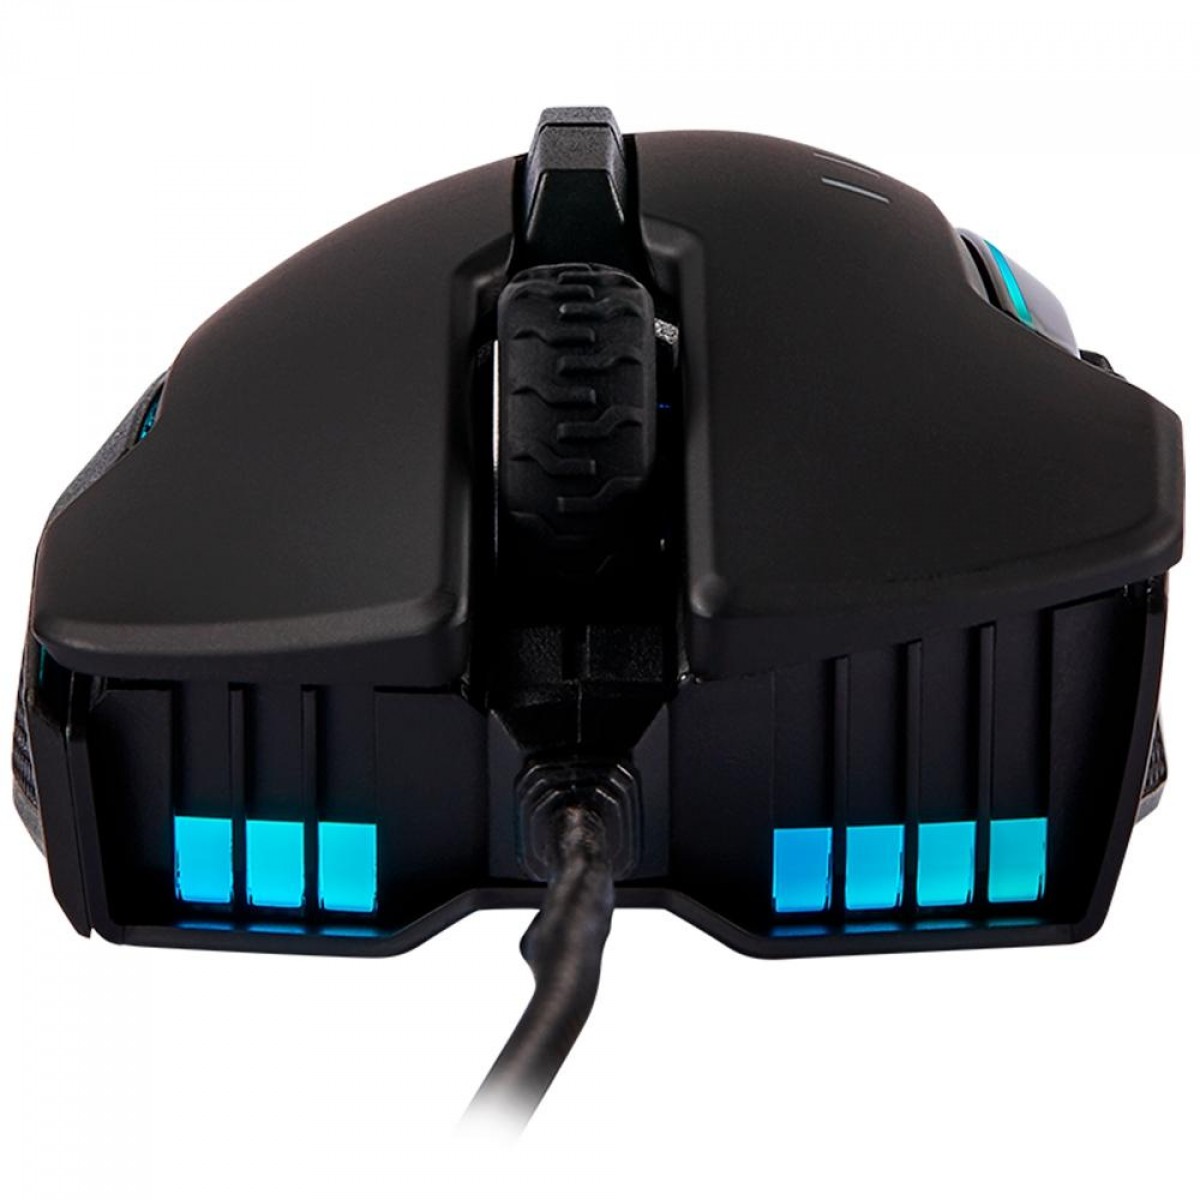 Mouse Gamer Corsair Glaive RGB PRO, 18.000 DPI, 7 Botões Programáveis, Black, CH-9302311-NA